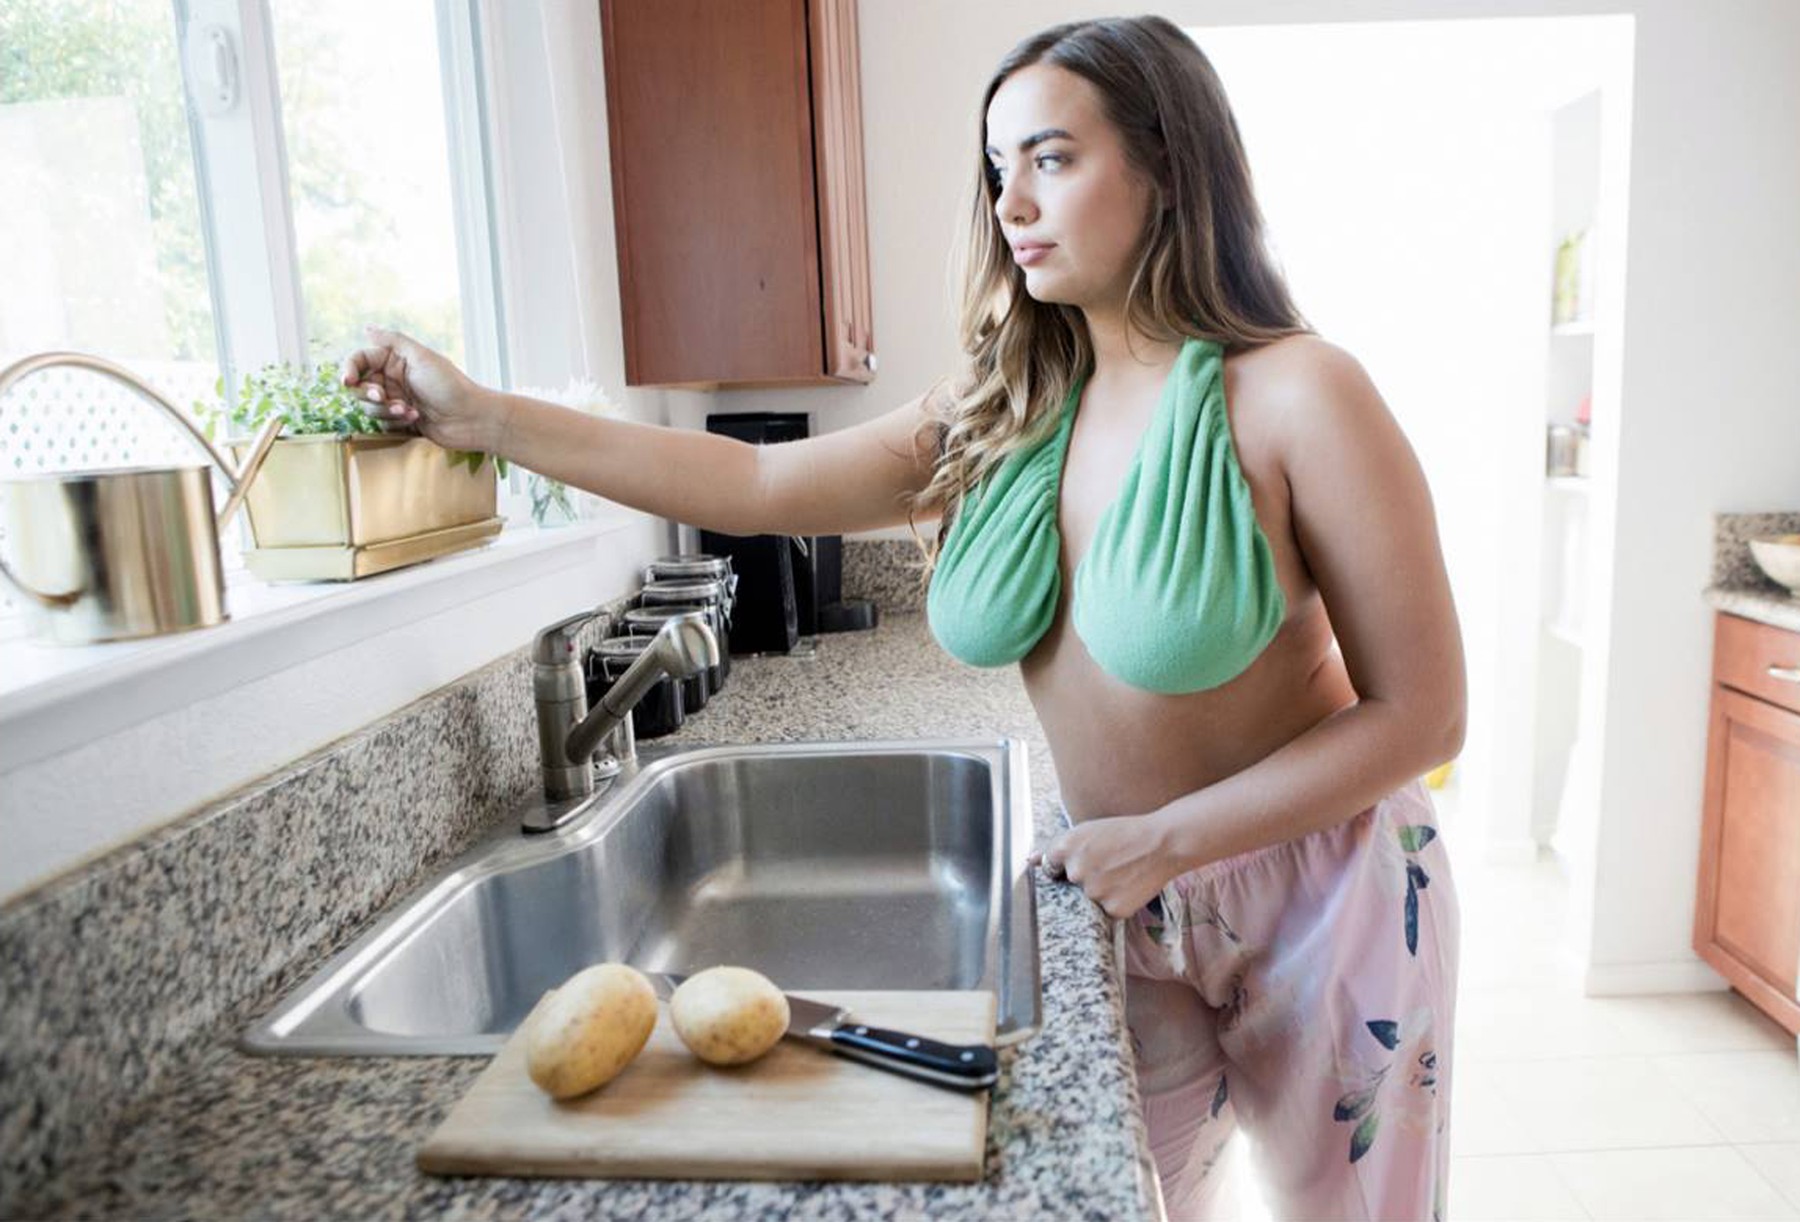 Домохозяйка с большими дойками отдалась хахалю на кухне - порно фото